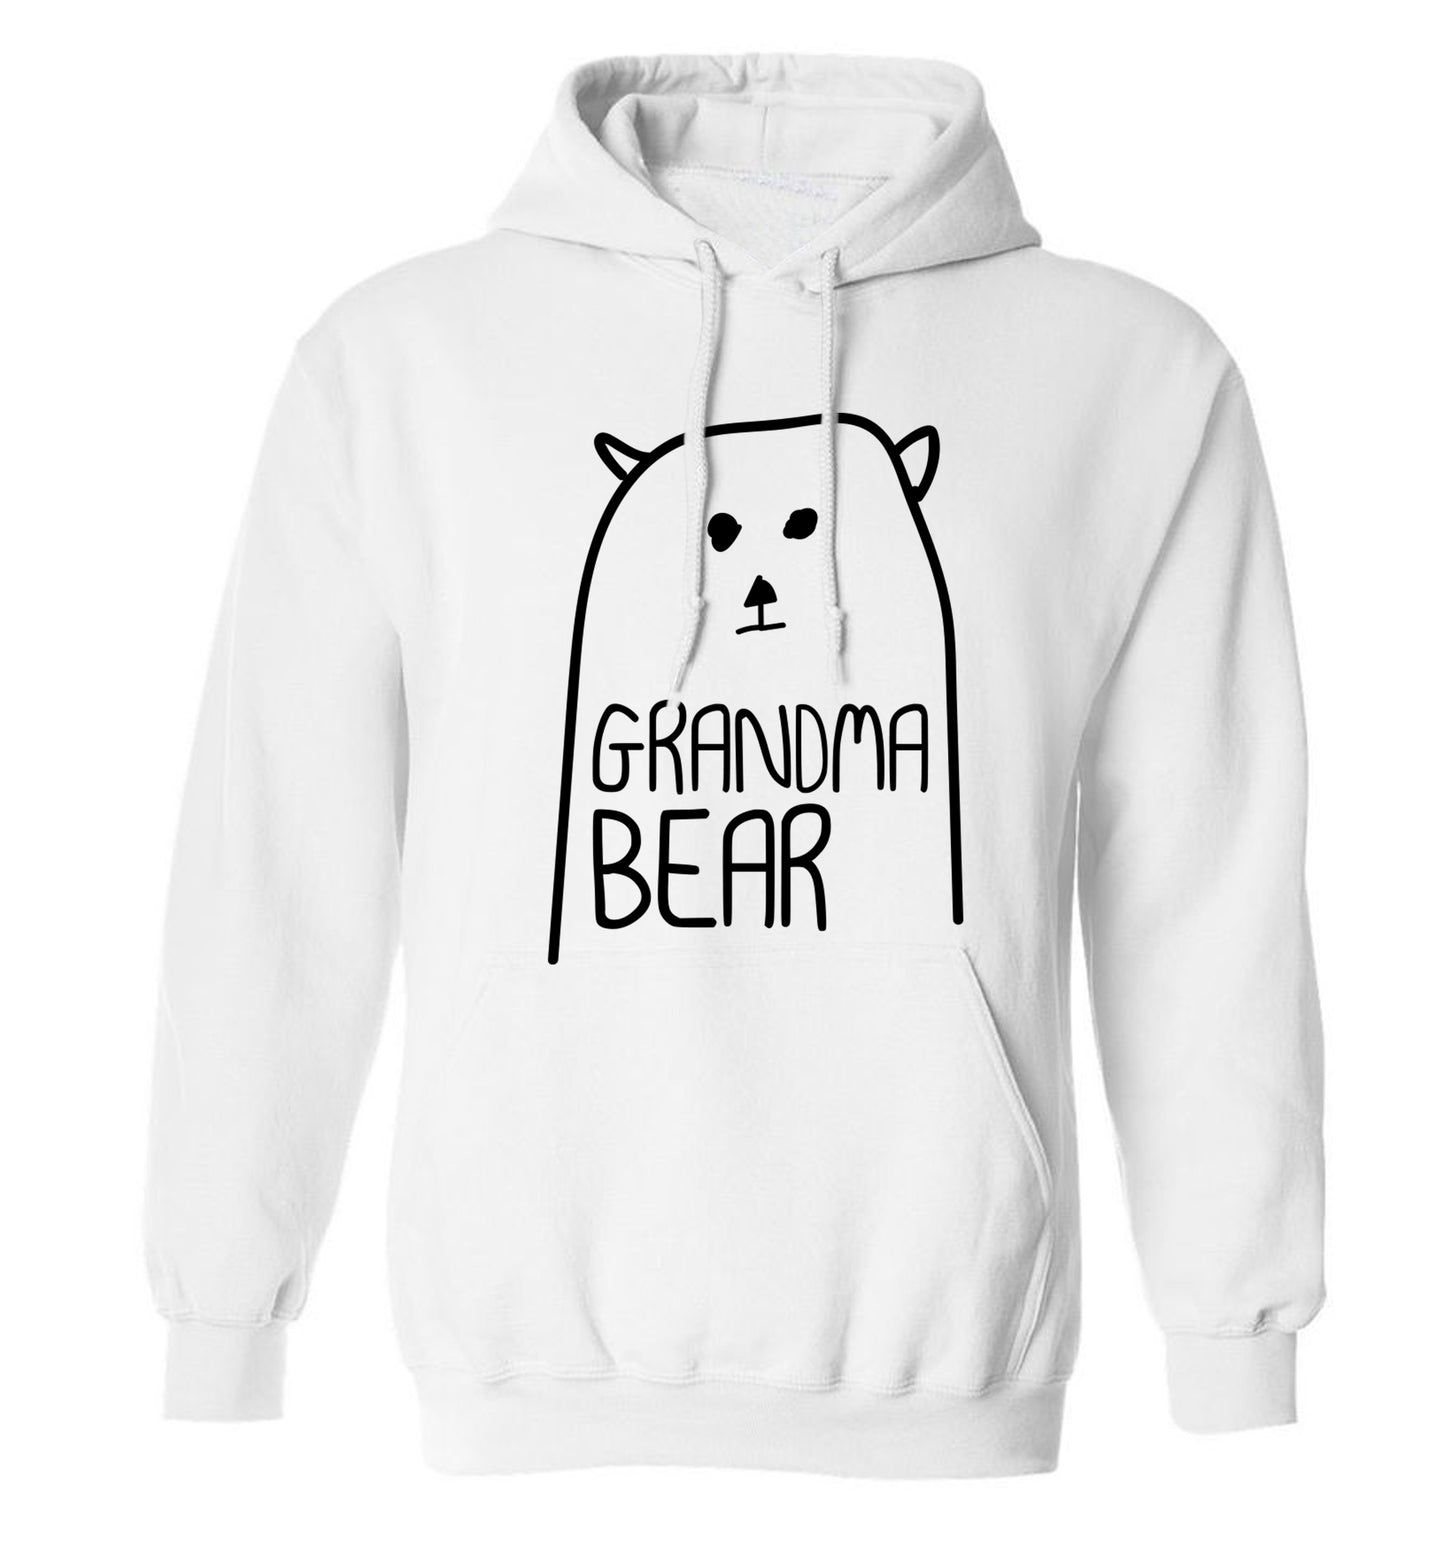 Grandma bear adults unisex white hoodie 2XL